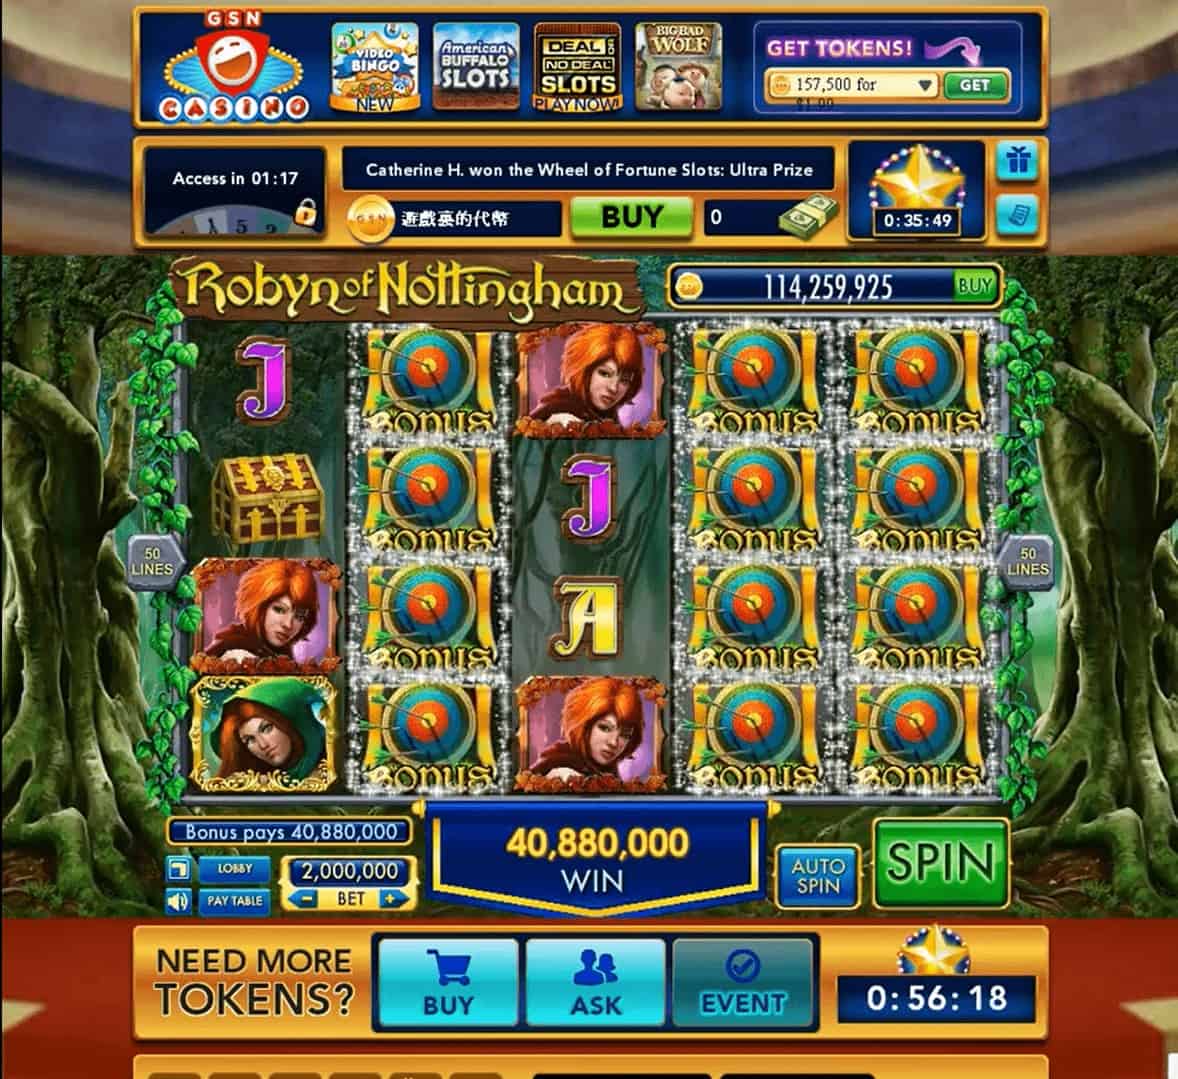 GSN Casino free tokens proof